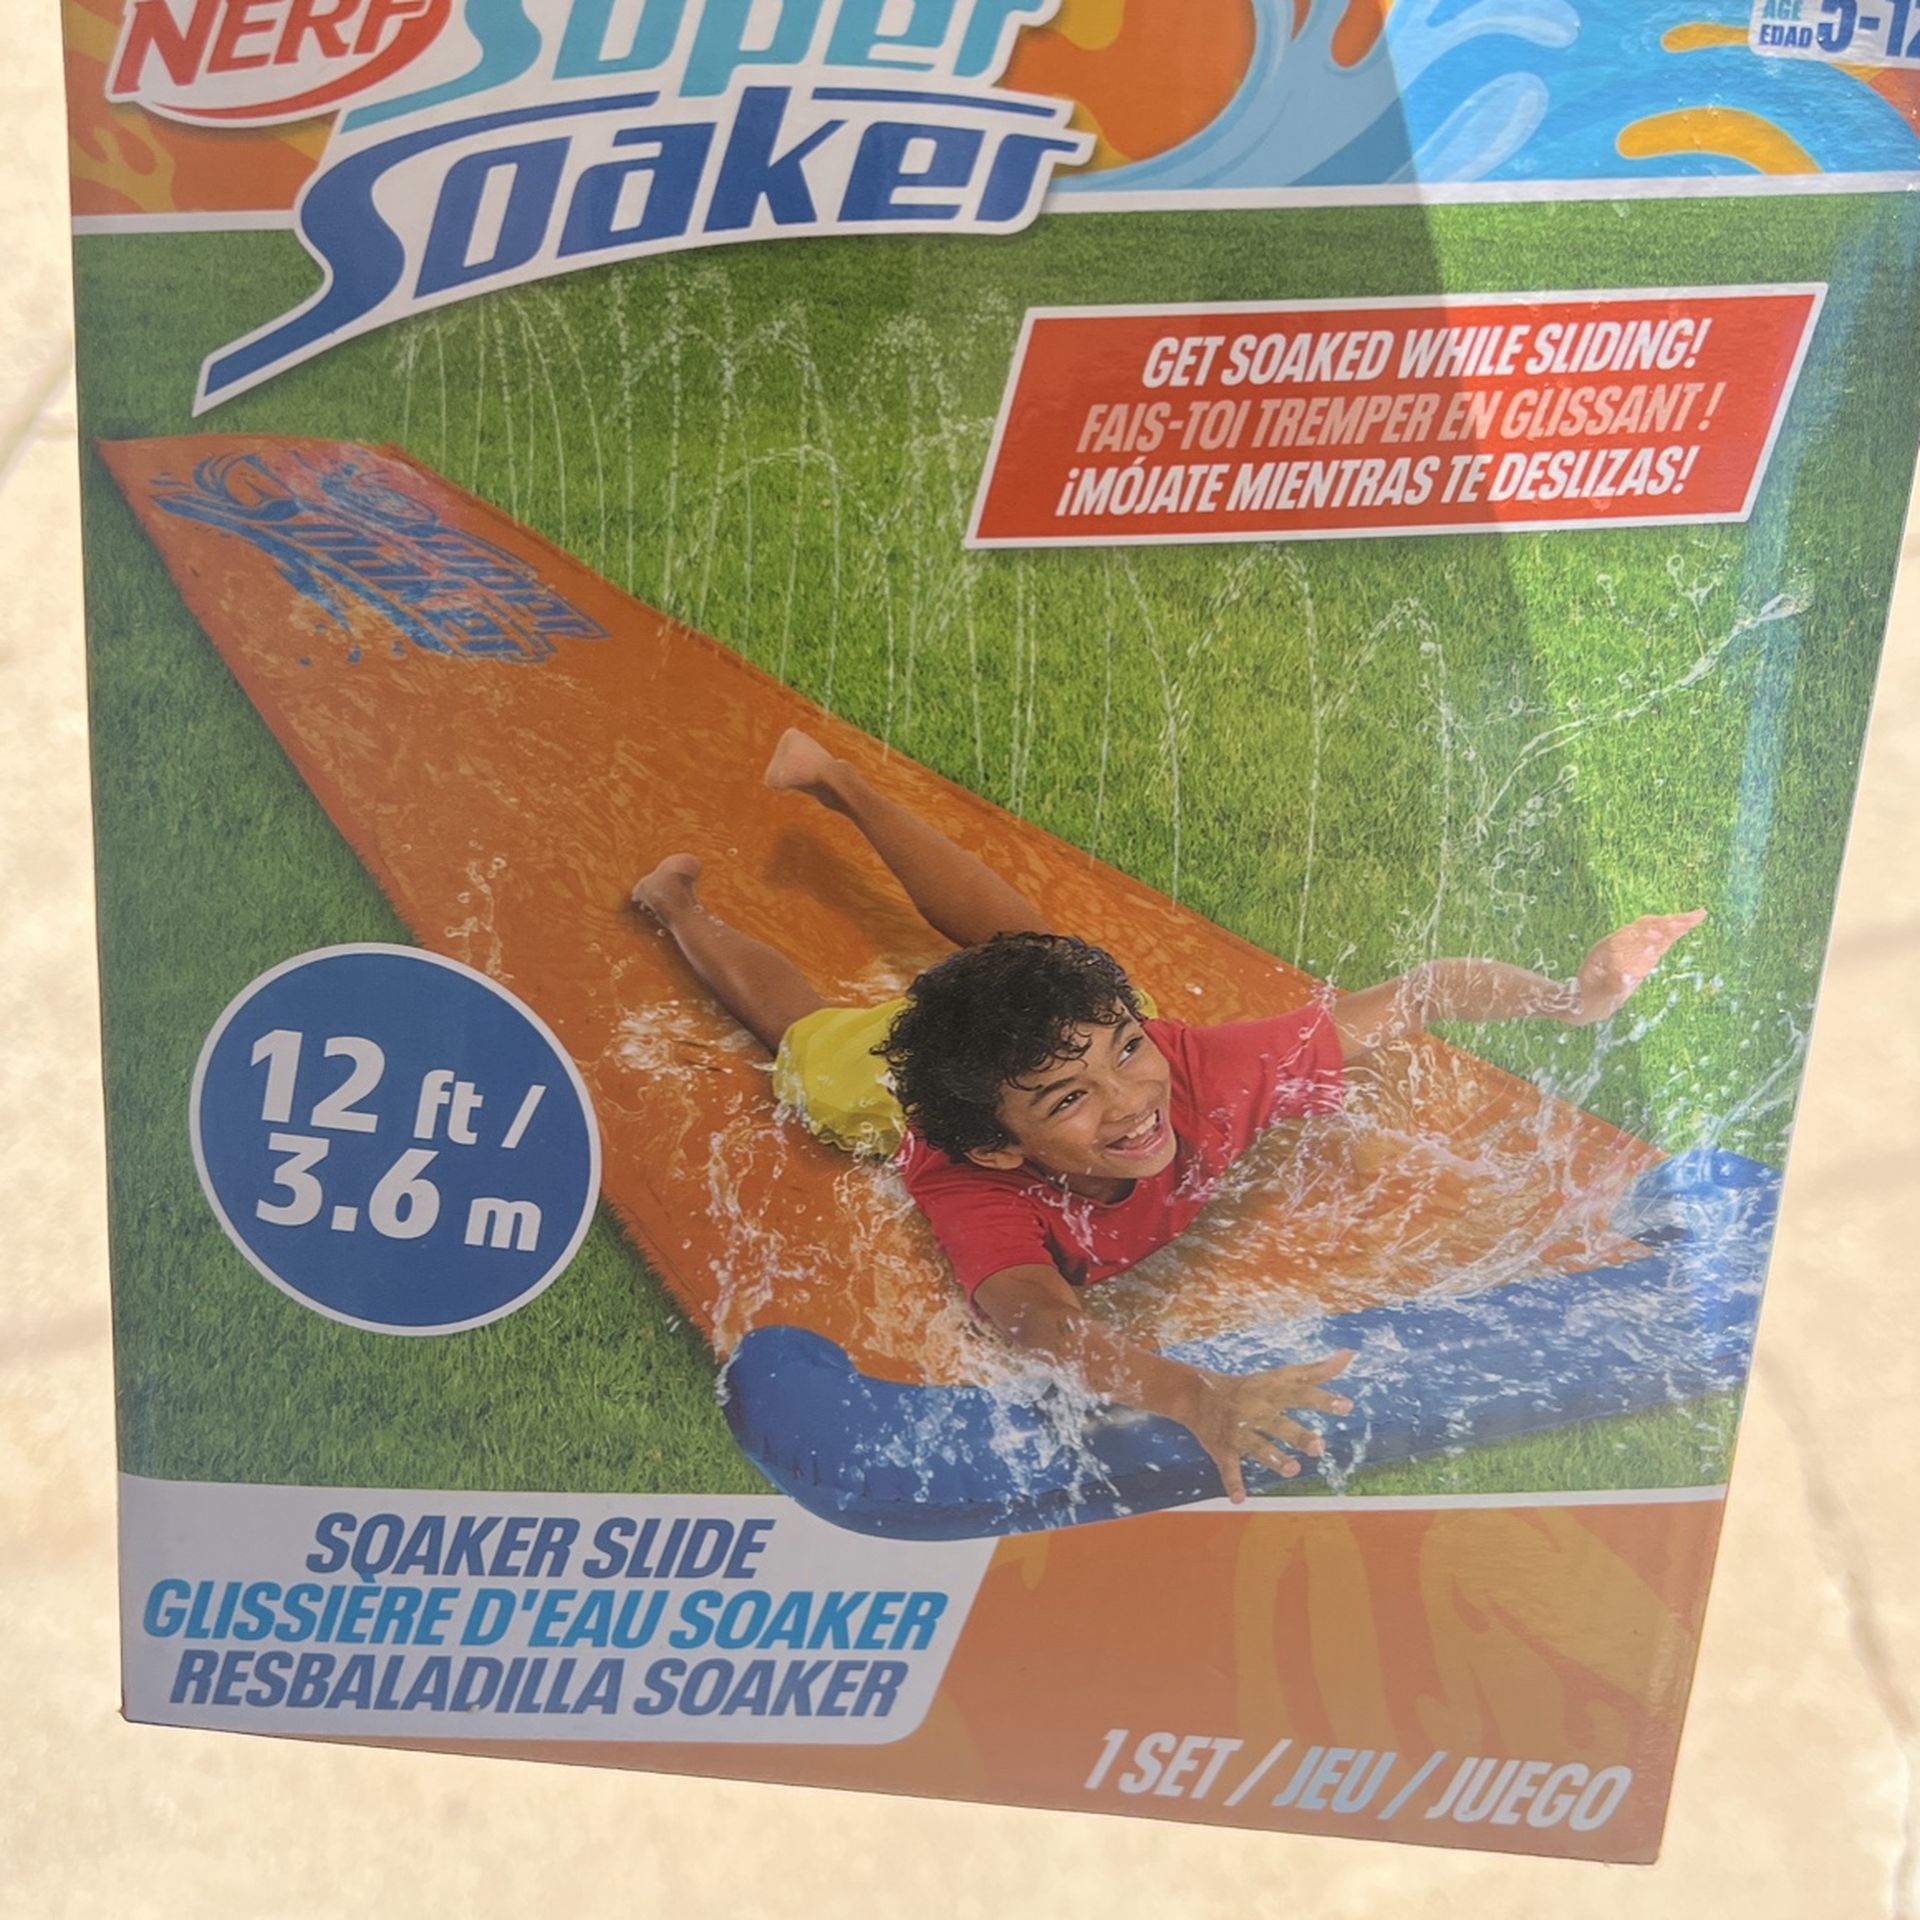 FREE NERF Super Soaker Blast Water Slide – 12 Ft Kids Water Slide for Outdoor Summer Fun